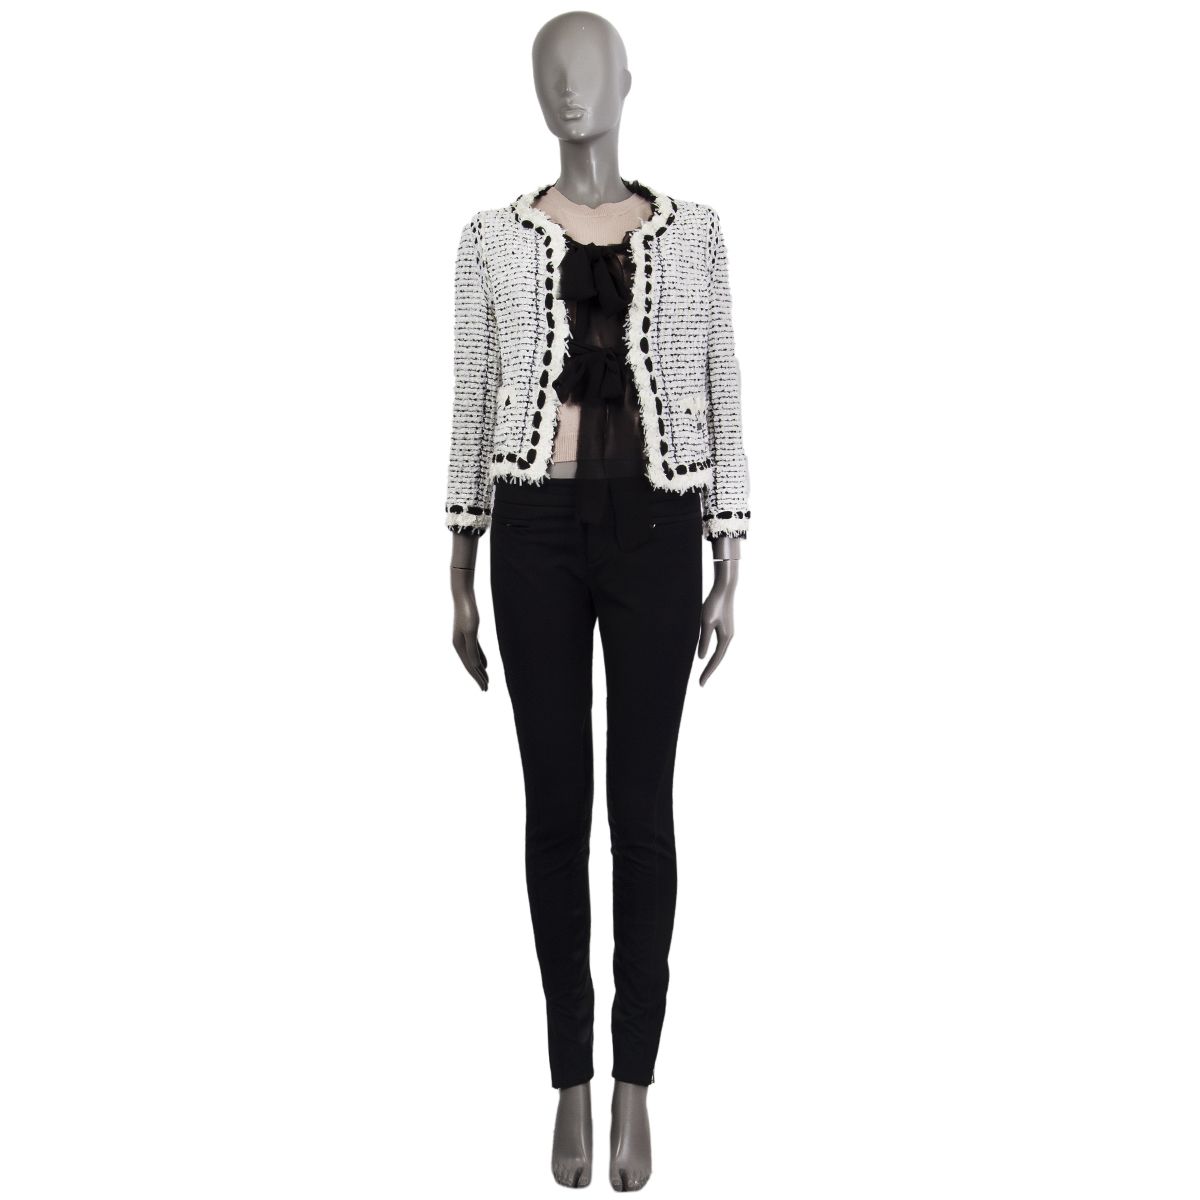 CHANELWhite Tweed Jacket  2019 La Pausa karllagerfeld Collection   Size 40  eBay